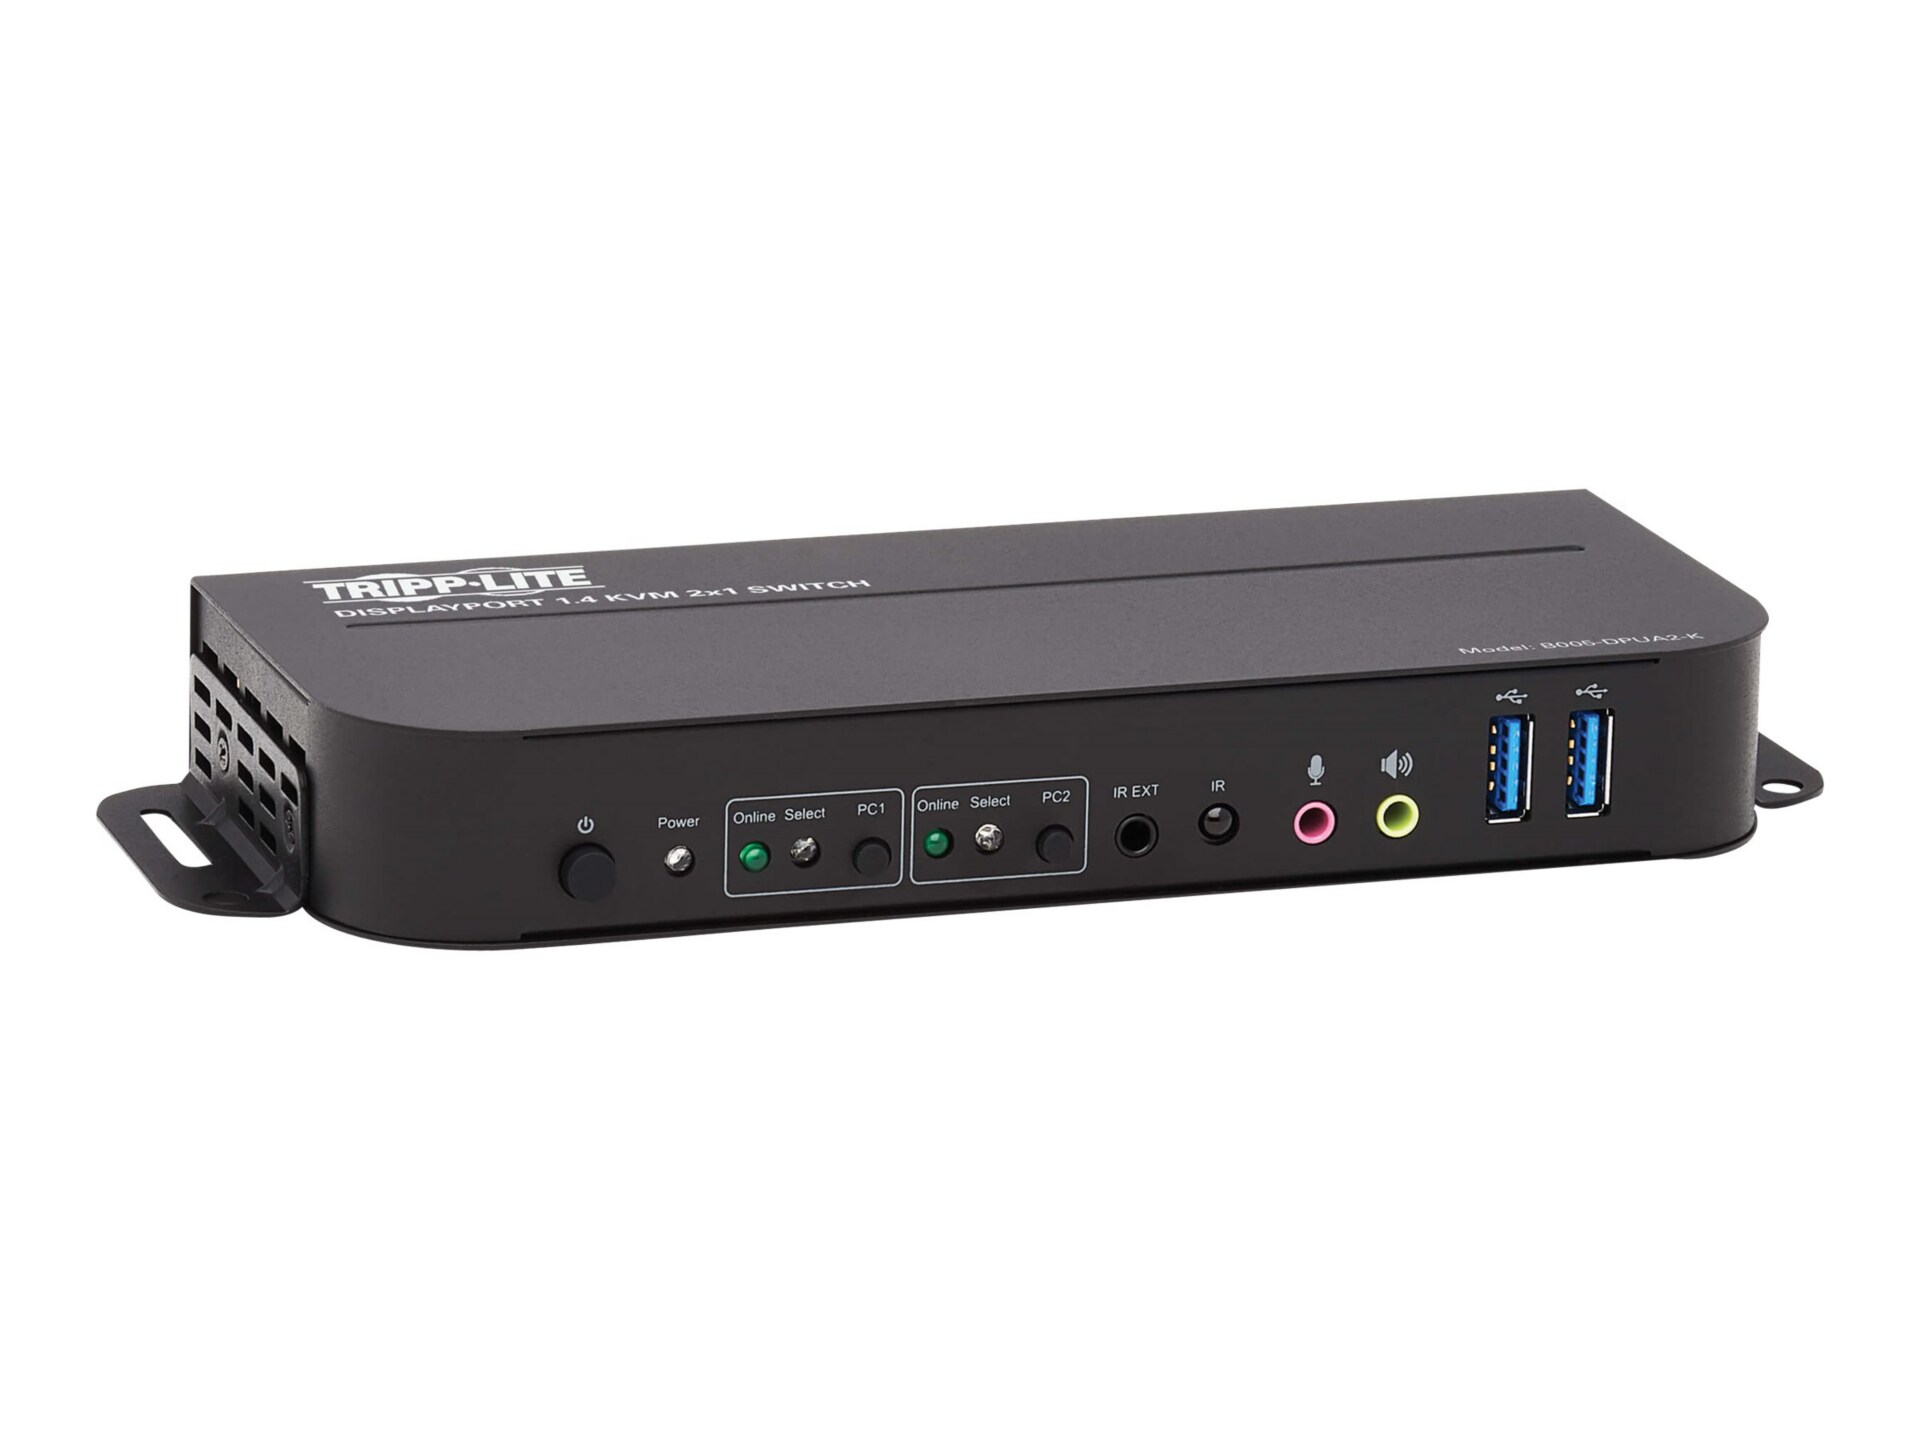 Eaton Tripp Lite series DisplayPort USB KVM Switch 2-Port 4K 60Hz HDR DP 1.